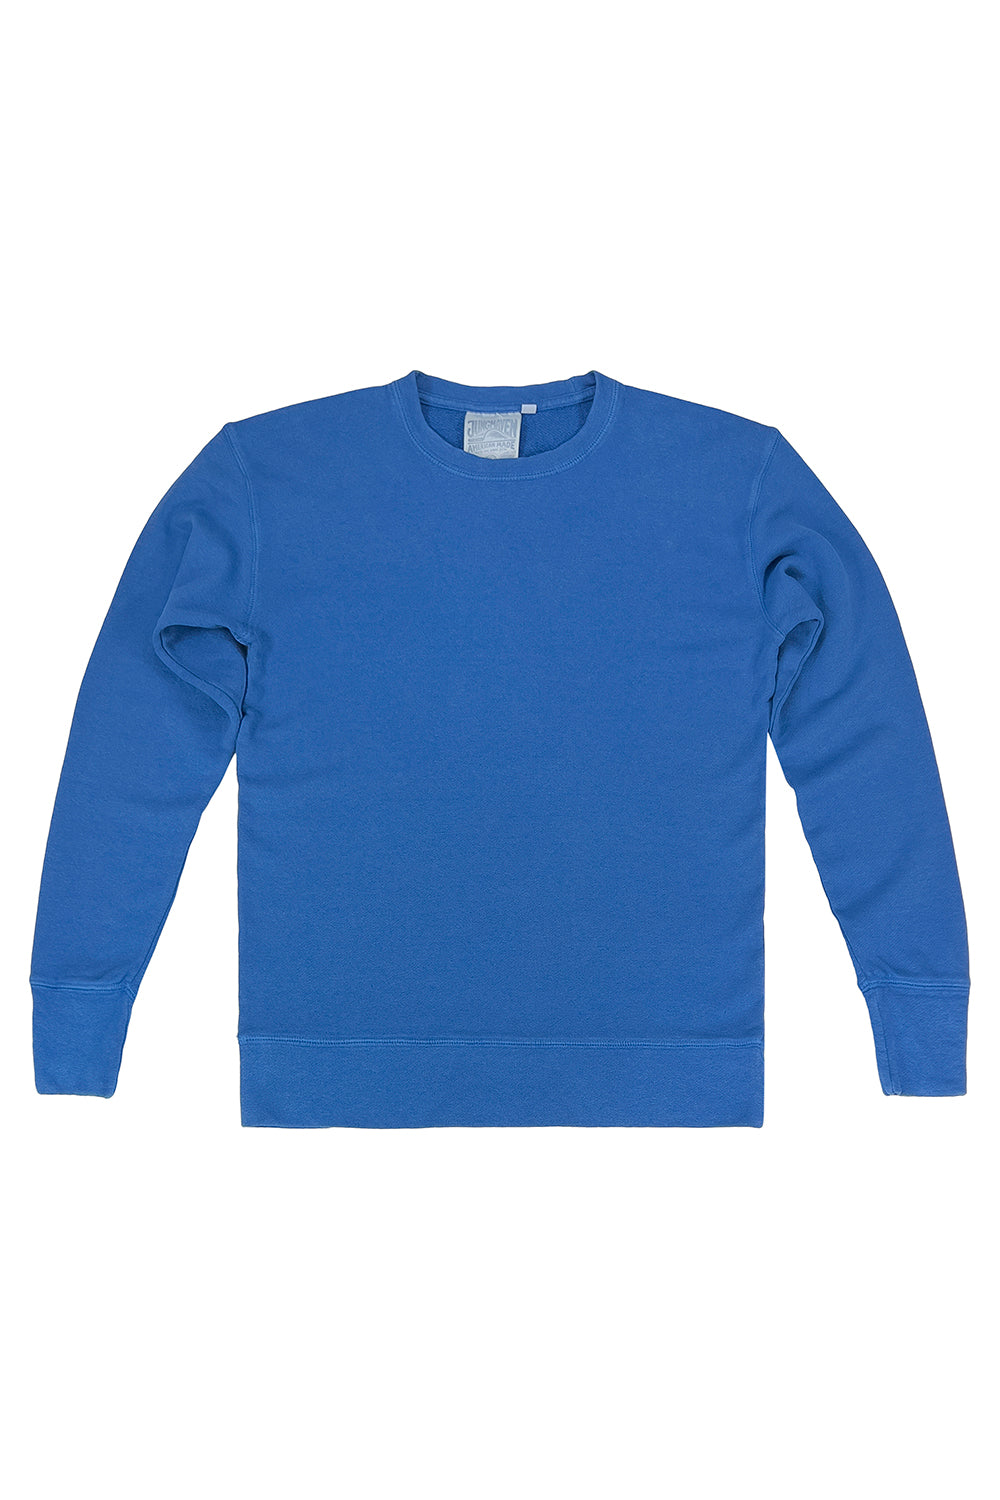 Tahoe Sweatshirt | Jungmaven Hemp Clothing